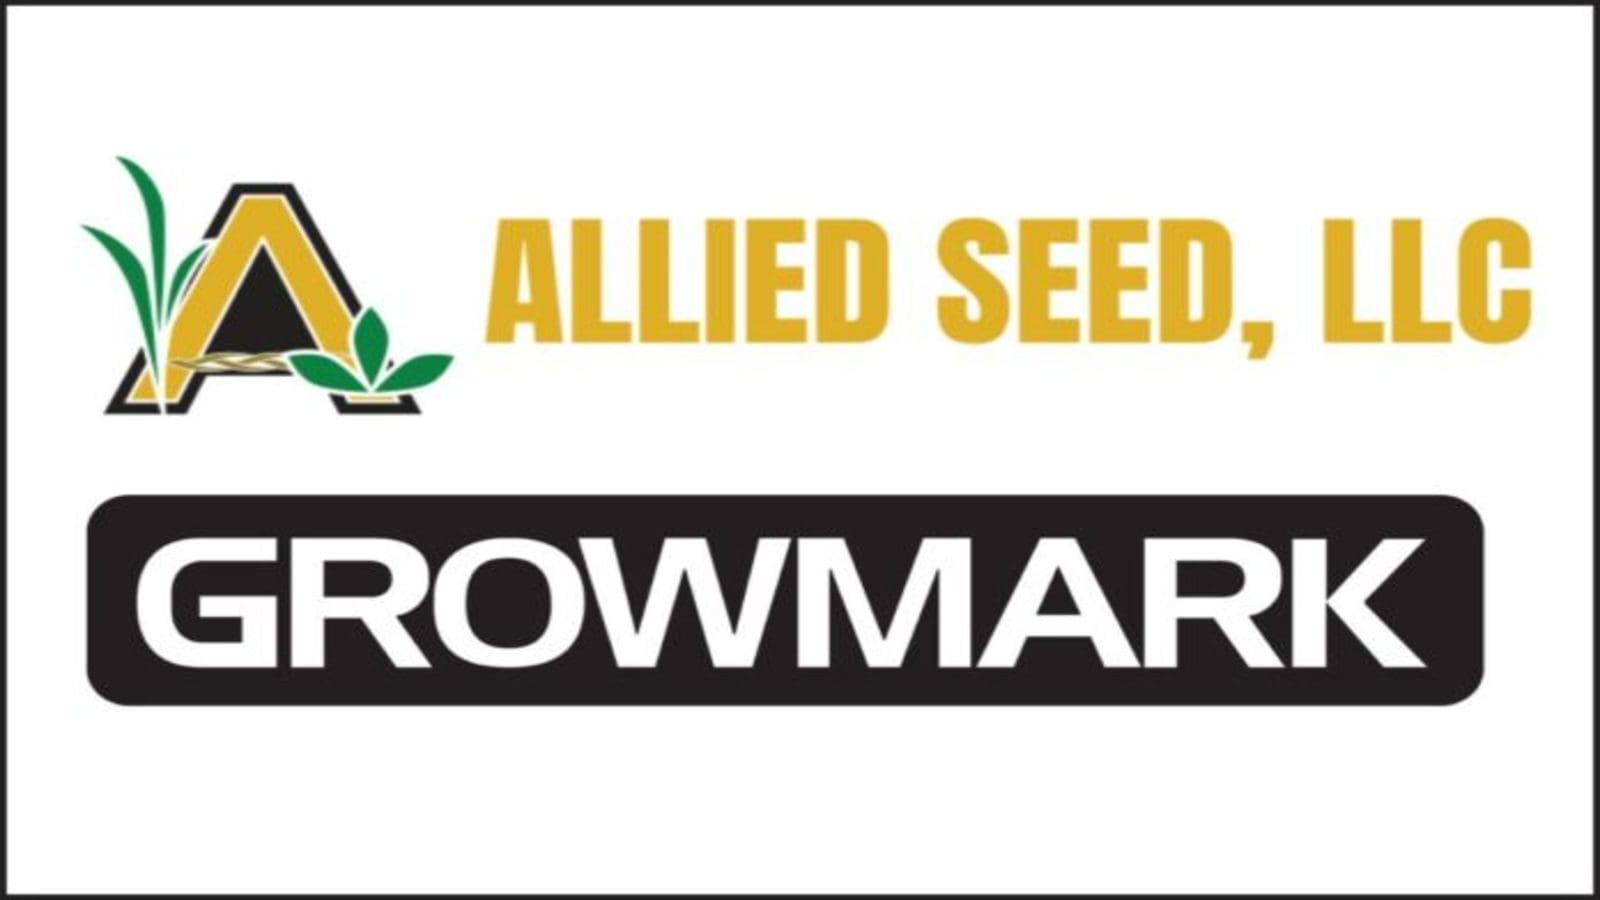 GROWMARK snaps up Allied Seed based in Nampa, Idaho USA